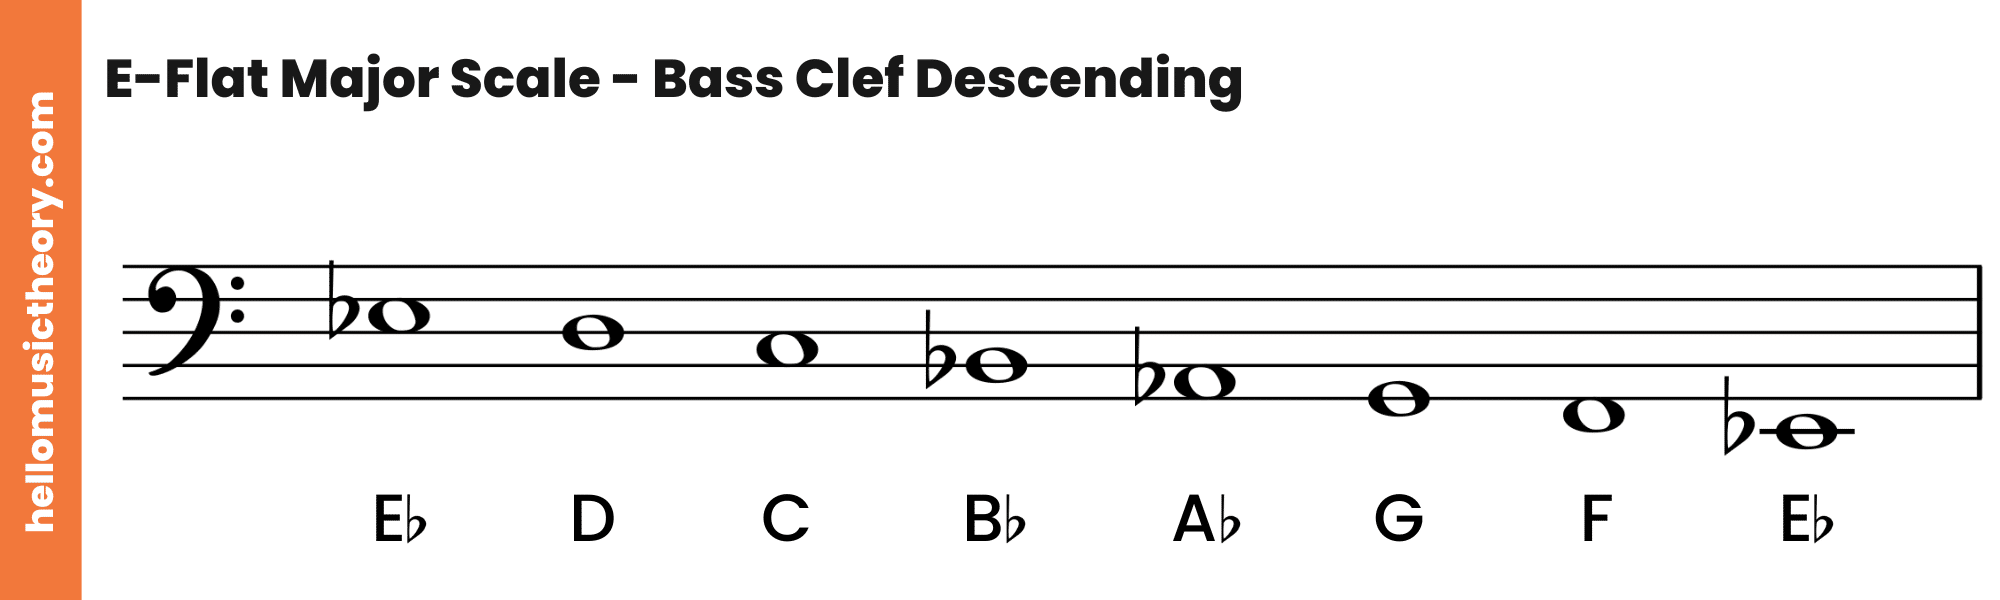 E-Flat Major Scale Bass Clef Descending